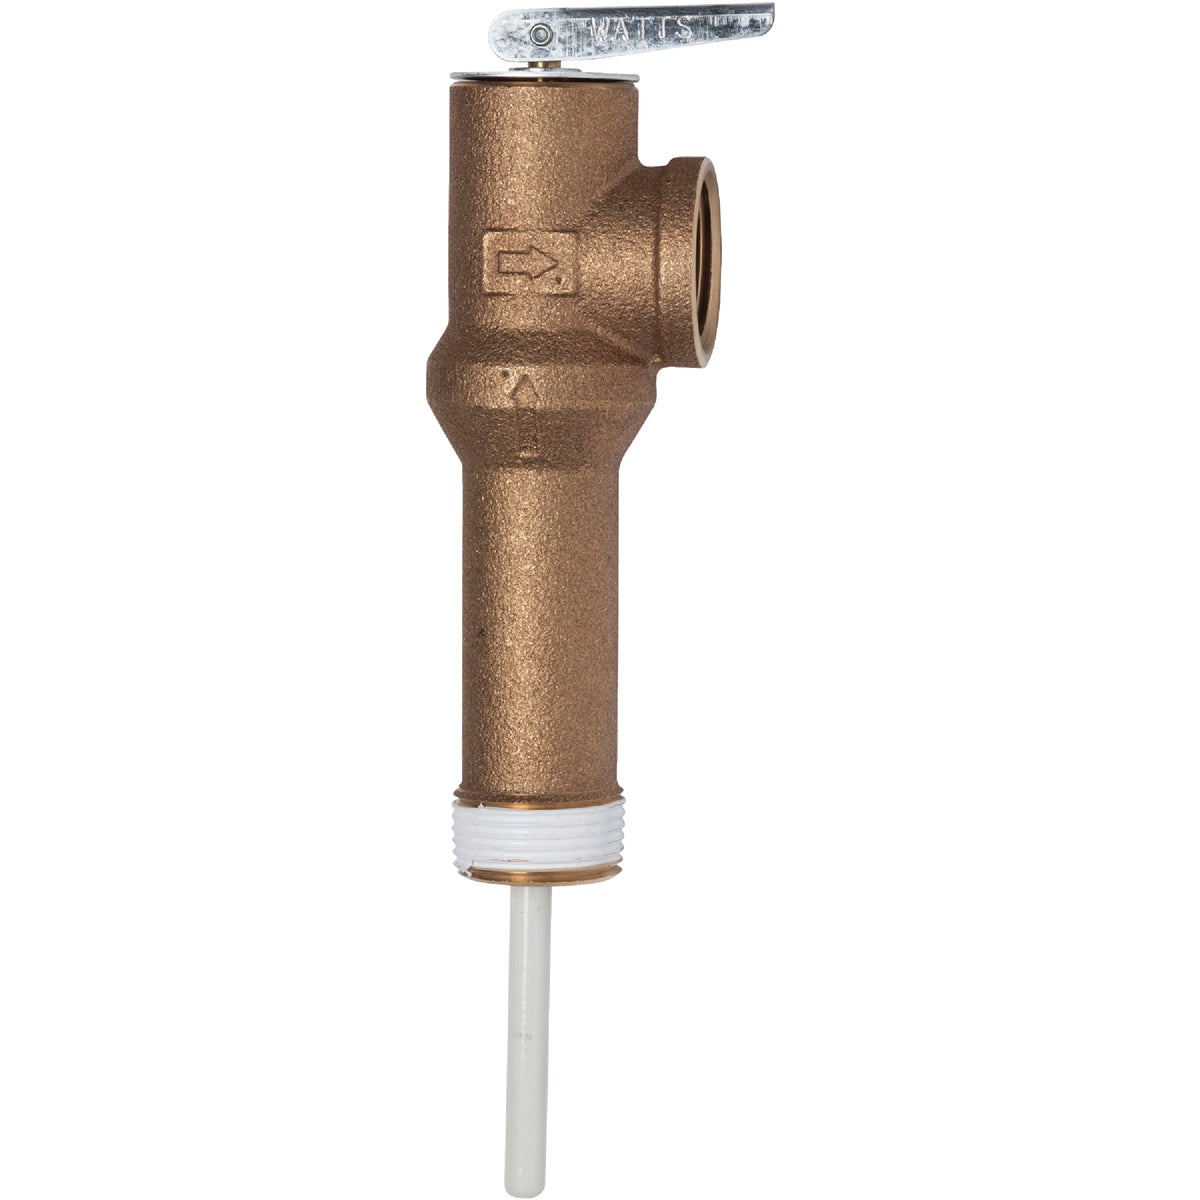 Item 433683, Temperature and pressure relief valve. ASME certified.